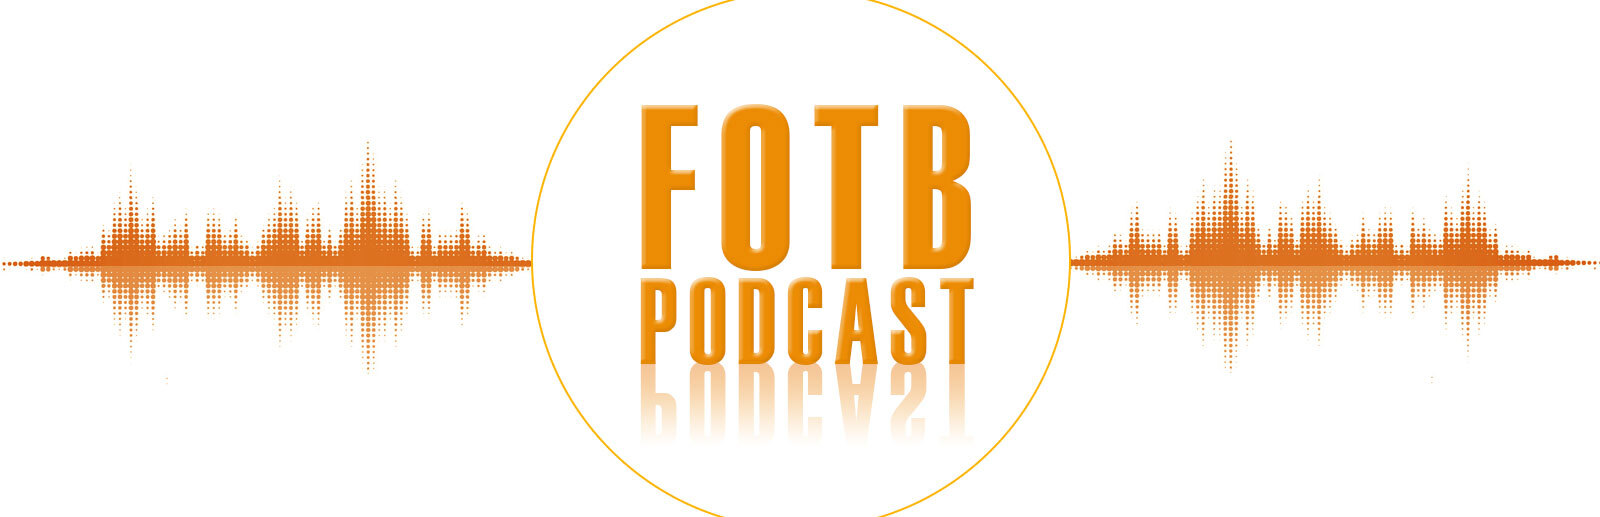 FOTB Podcast